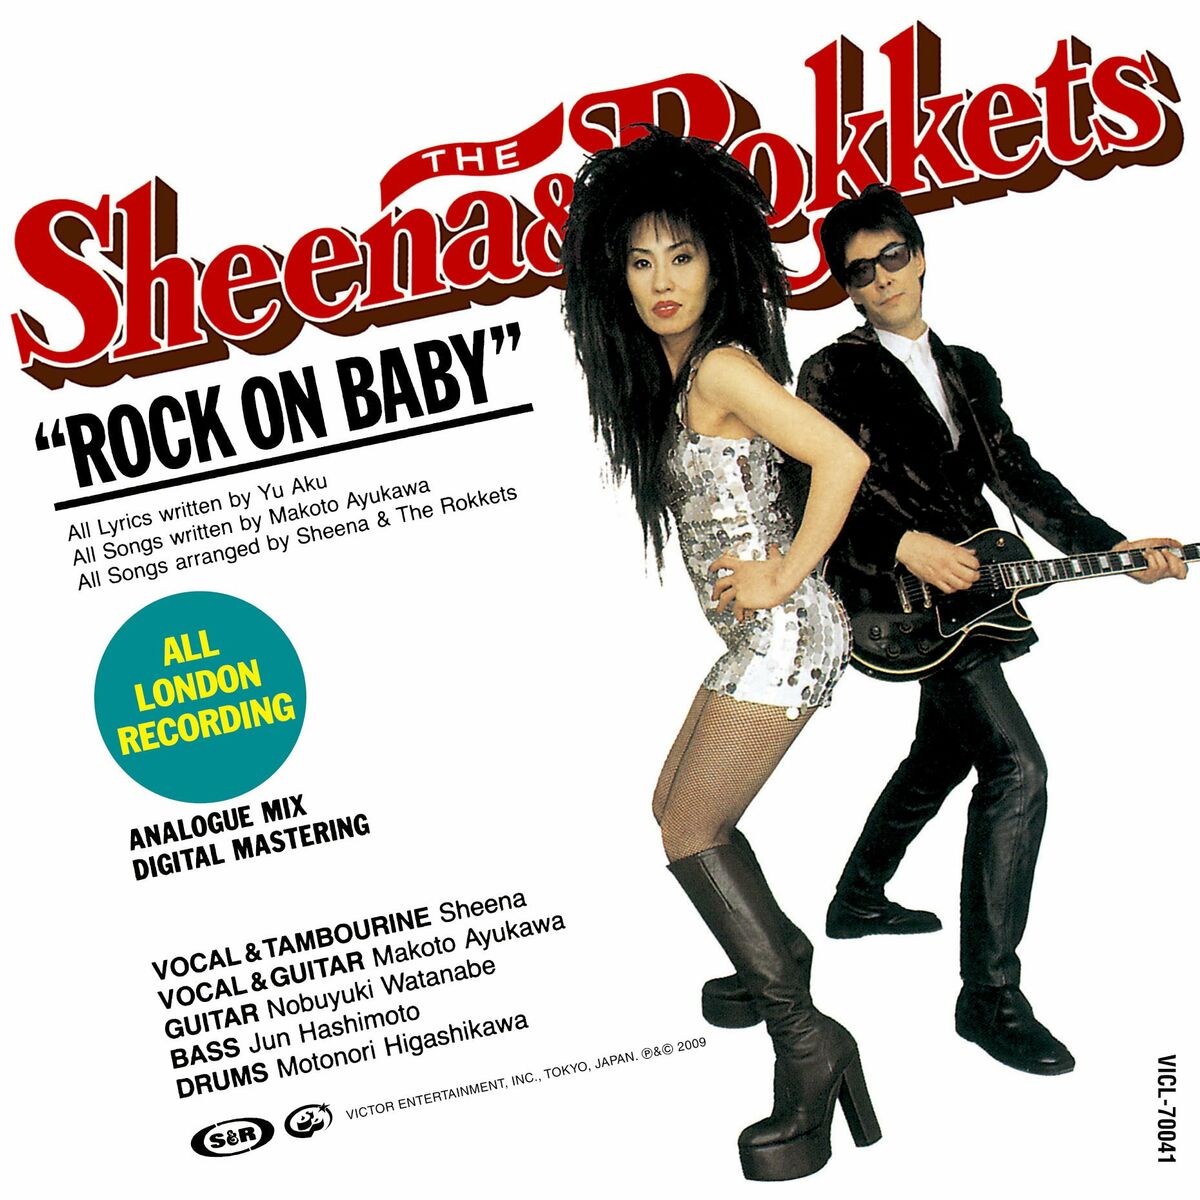 Sheena & the Rokkets: albums, songs, playlists | Listen on Deezer